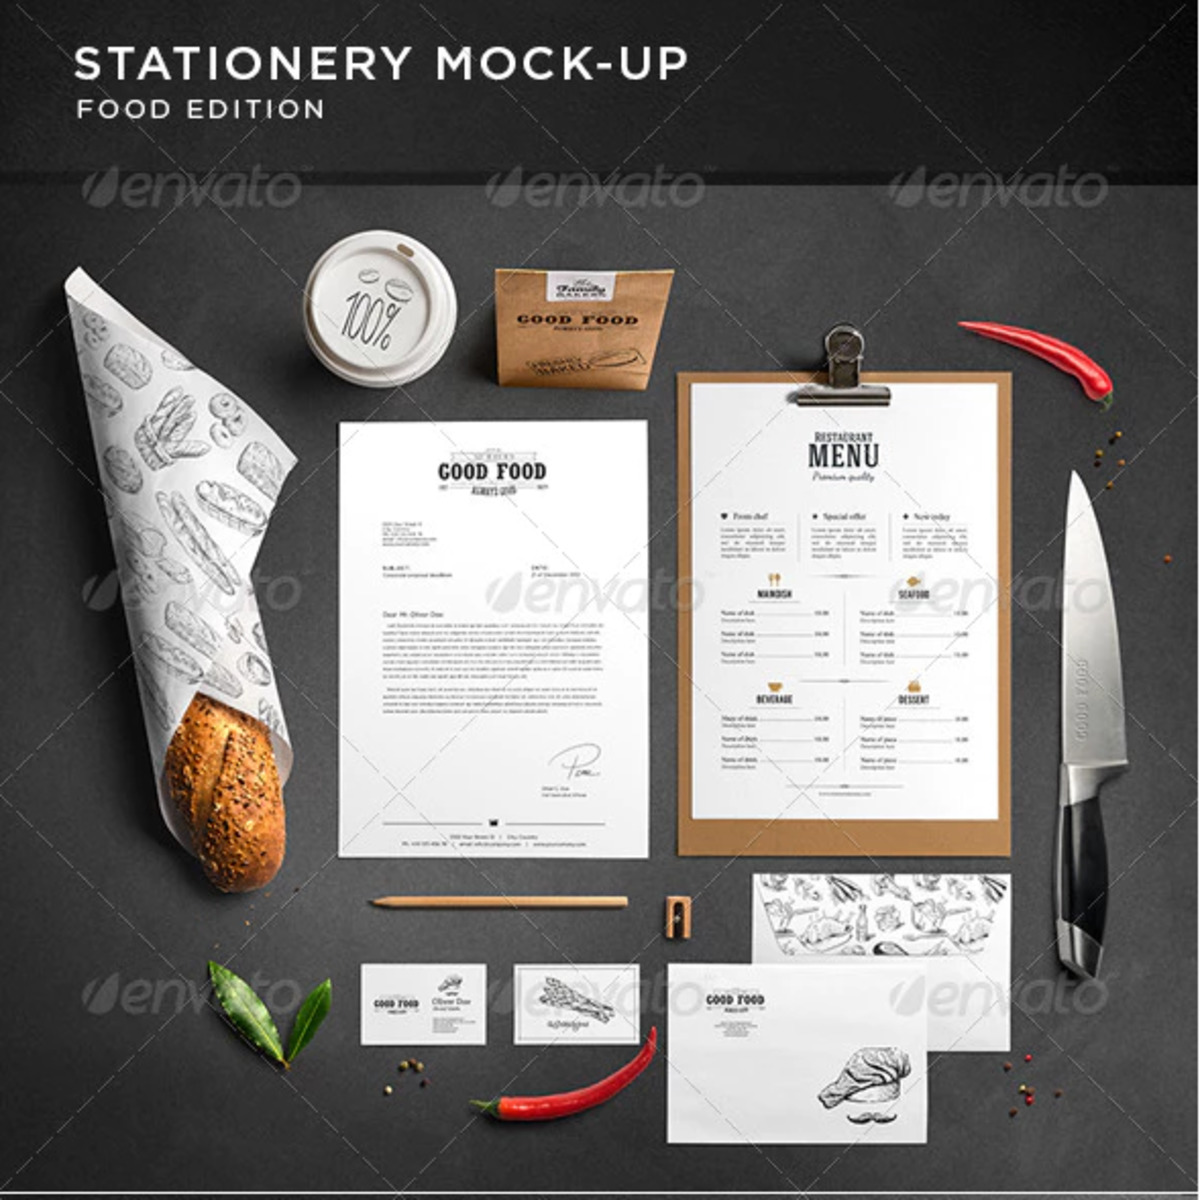 Papeterie Branding Mockup Food Edition